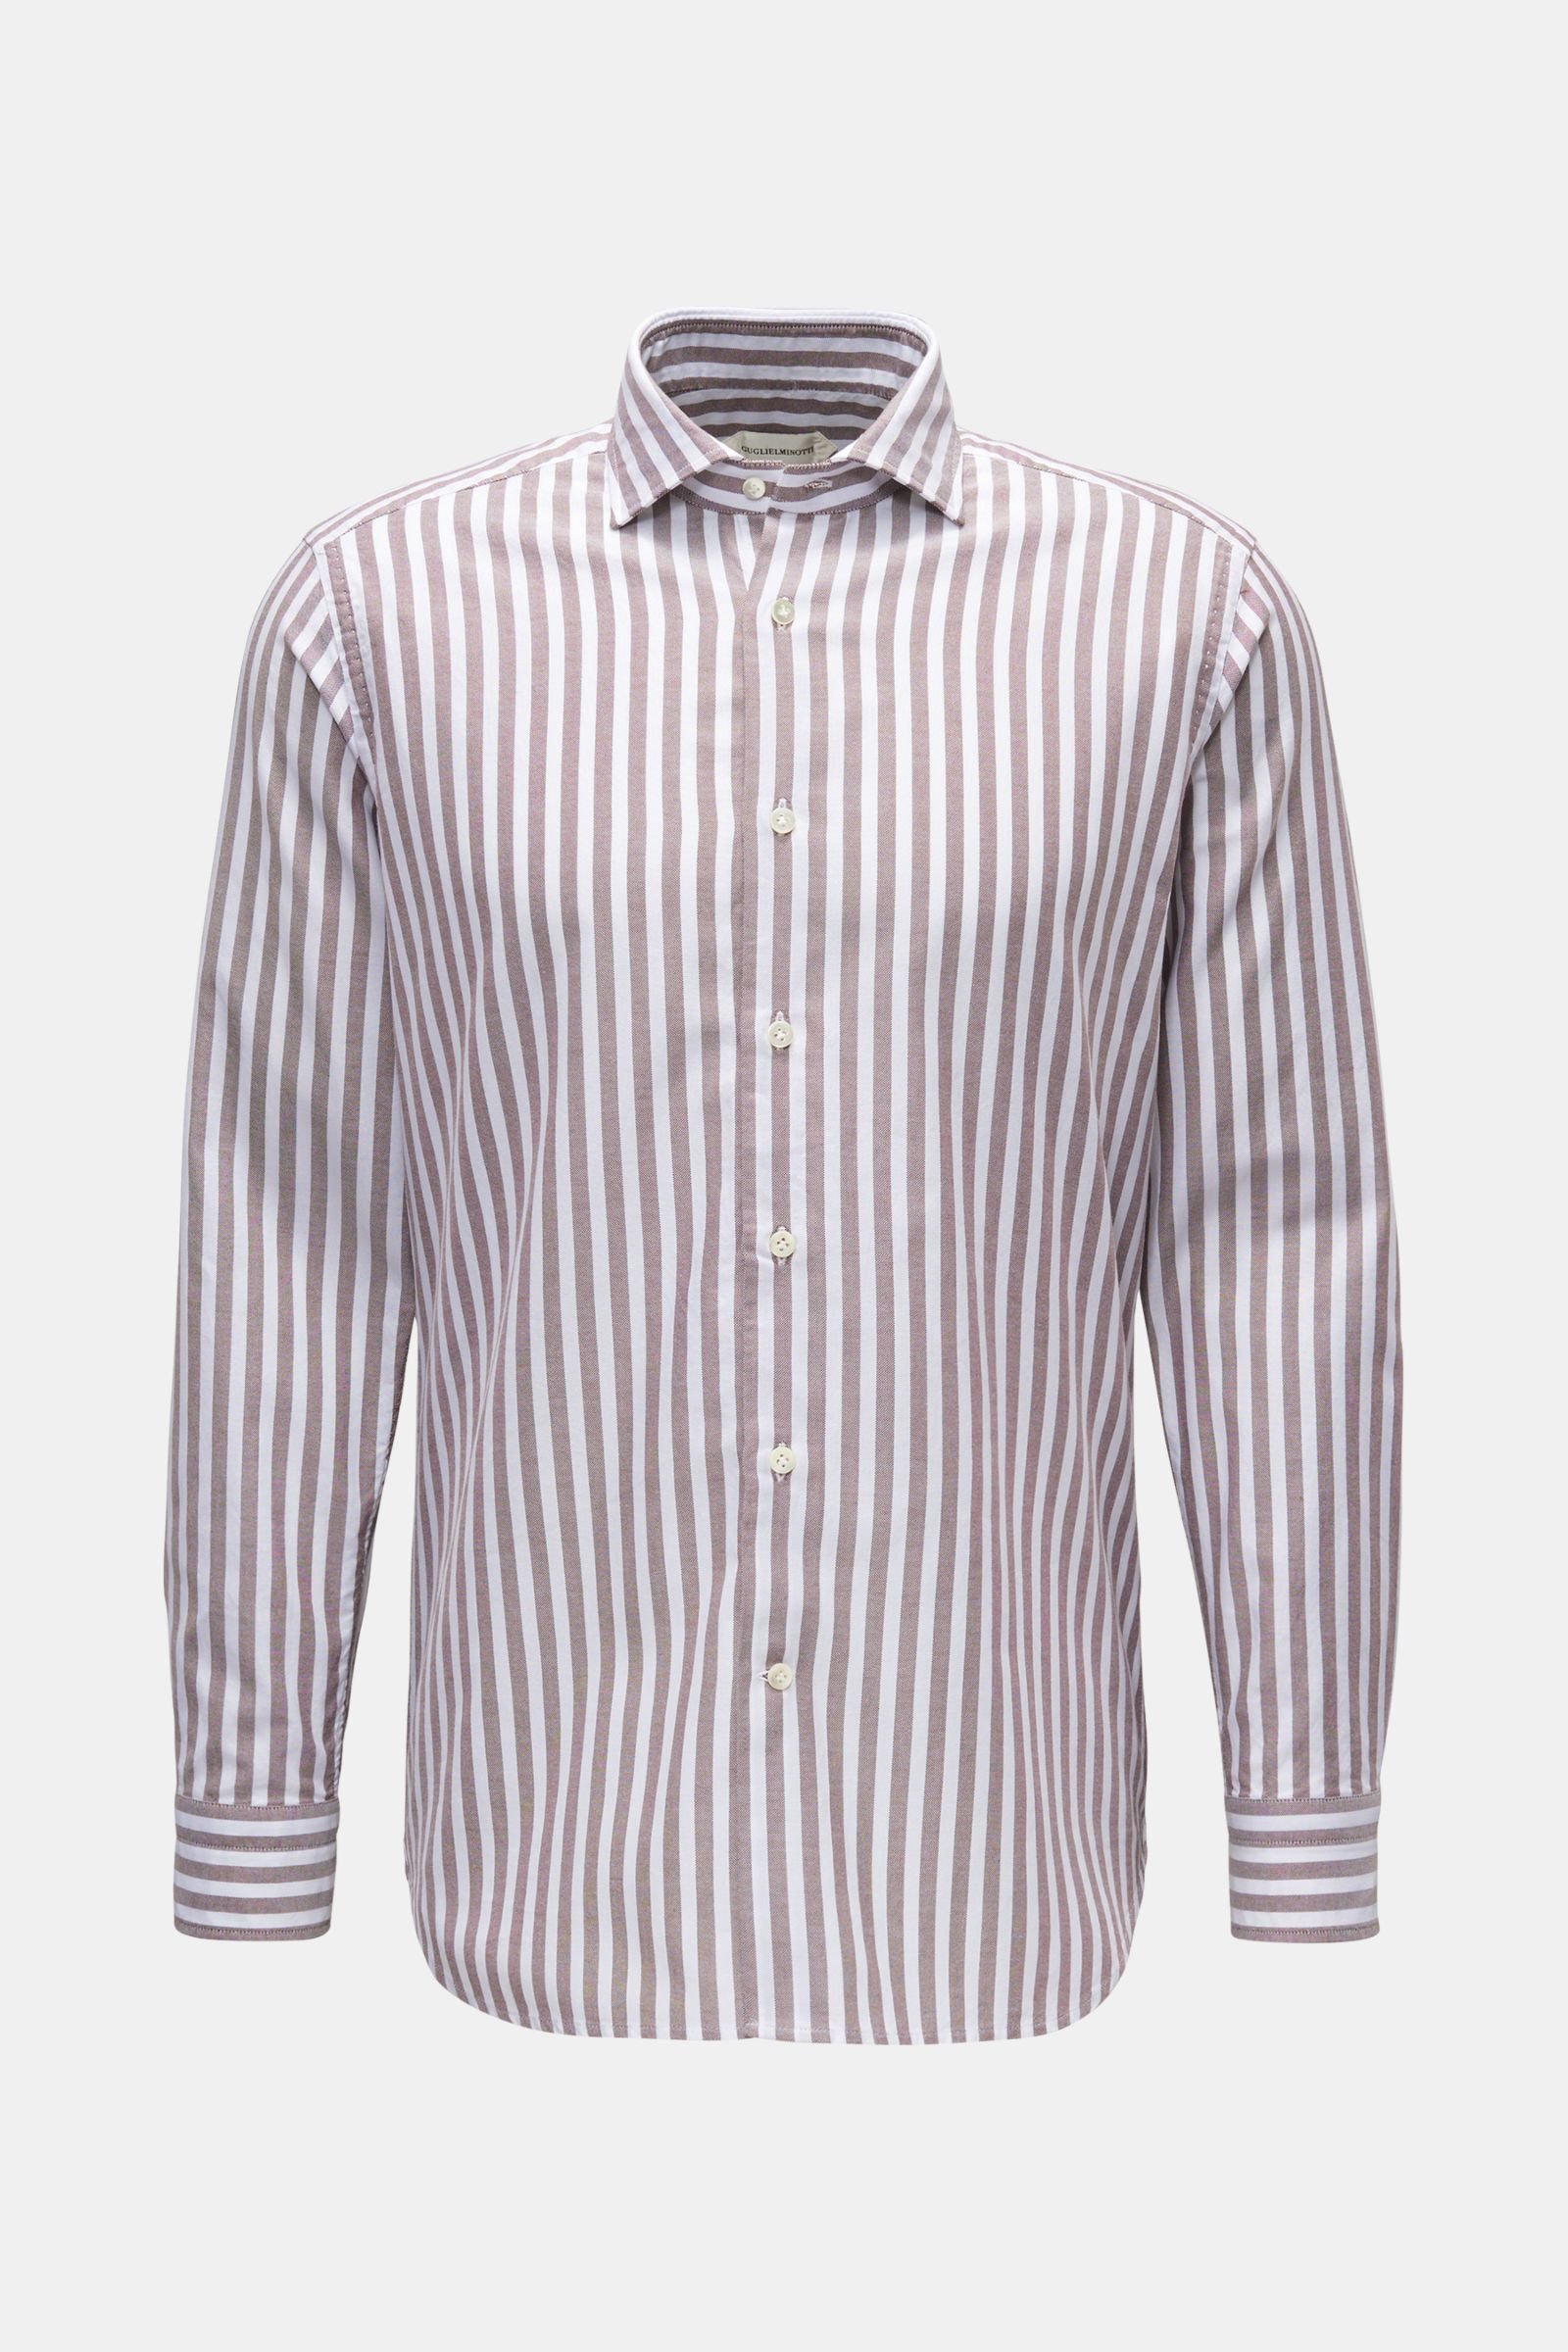 Oxford shirt shark collar grey-brown/white striped